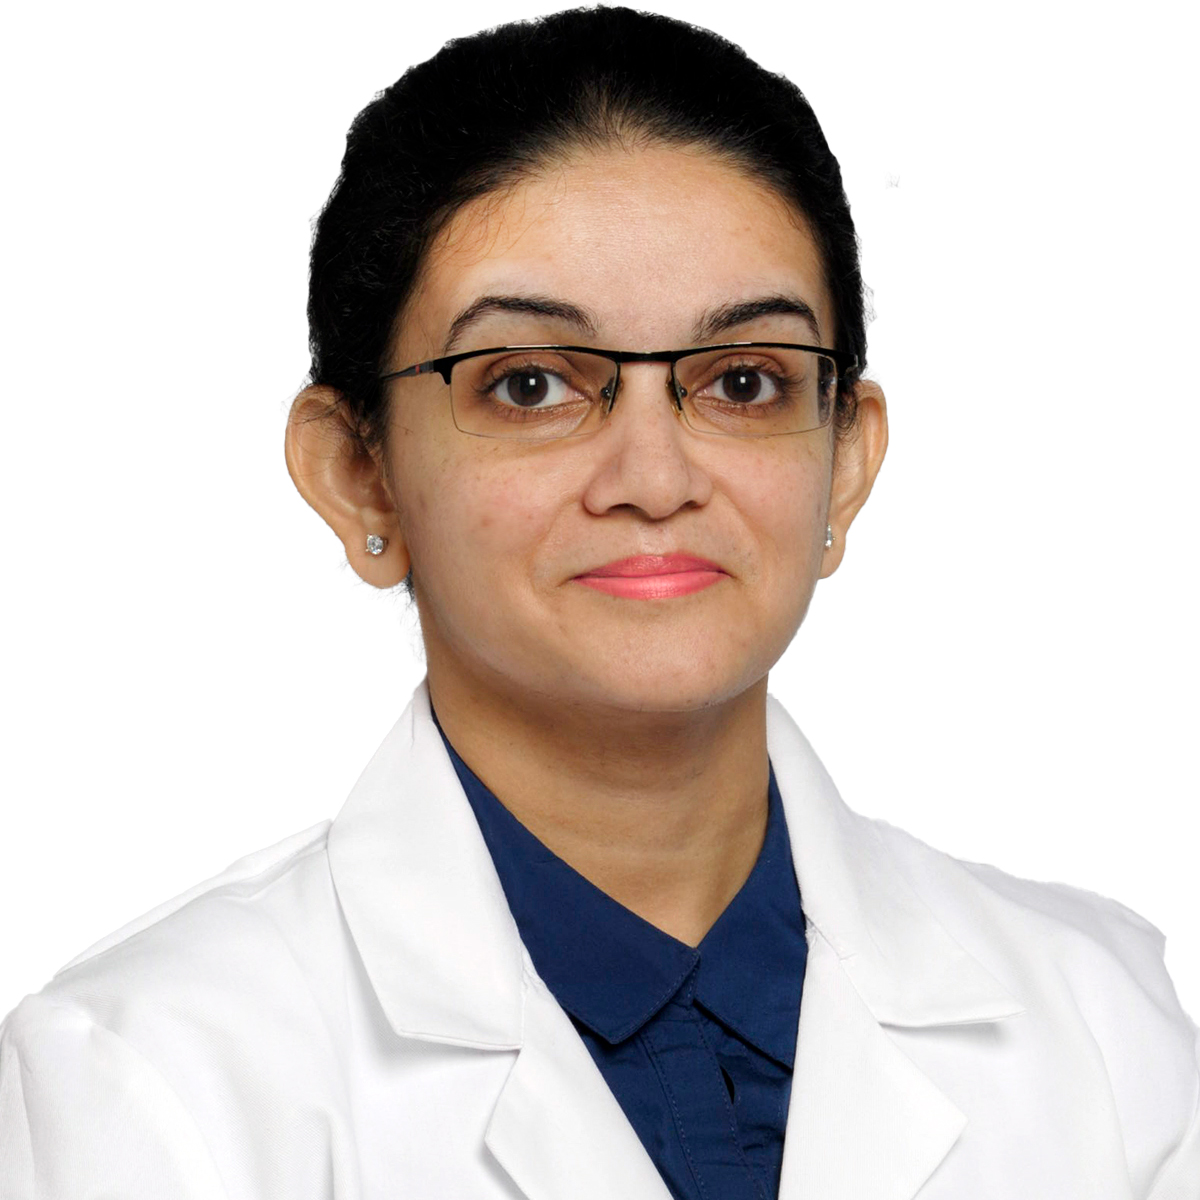 Dr. Rima Chaudhari Neurology Fortis Hospital, Mulund